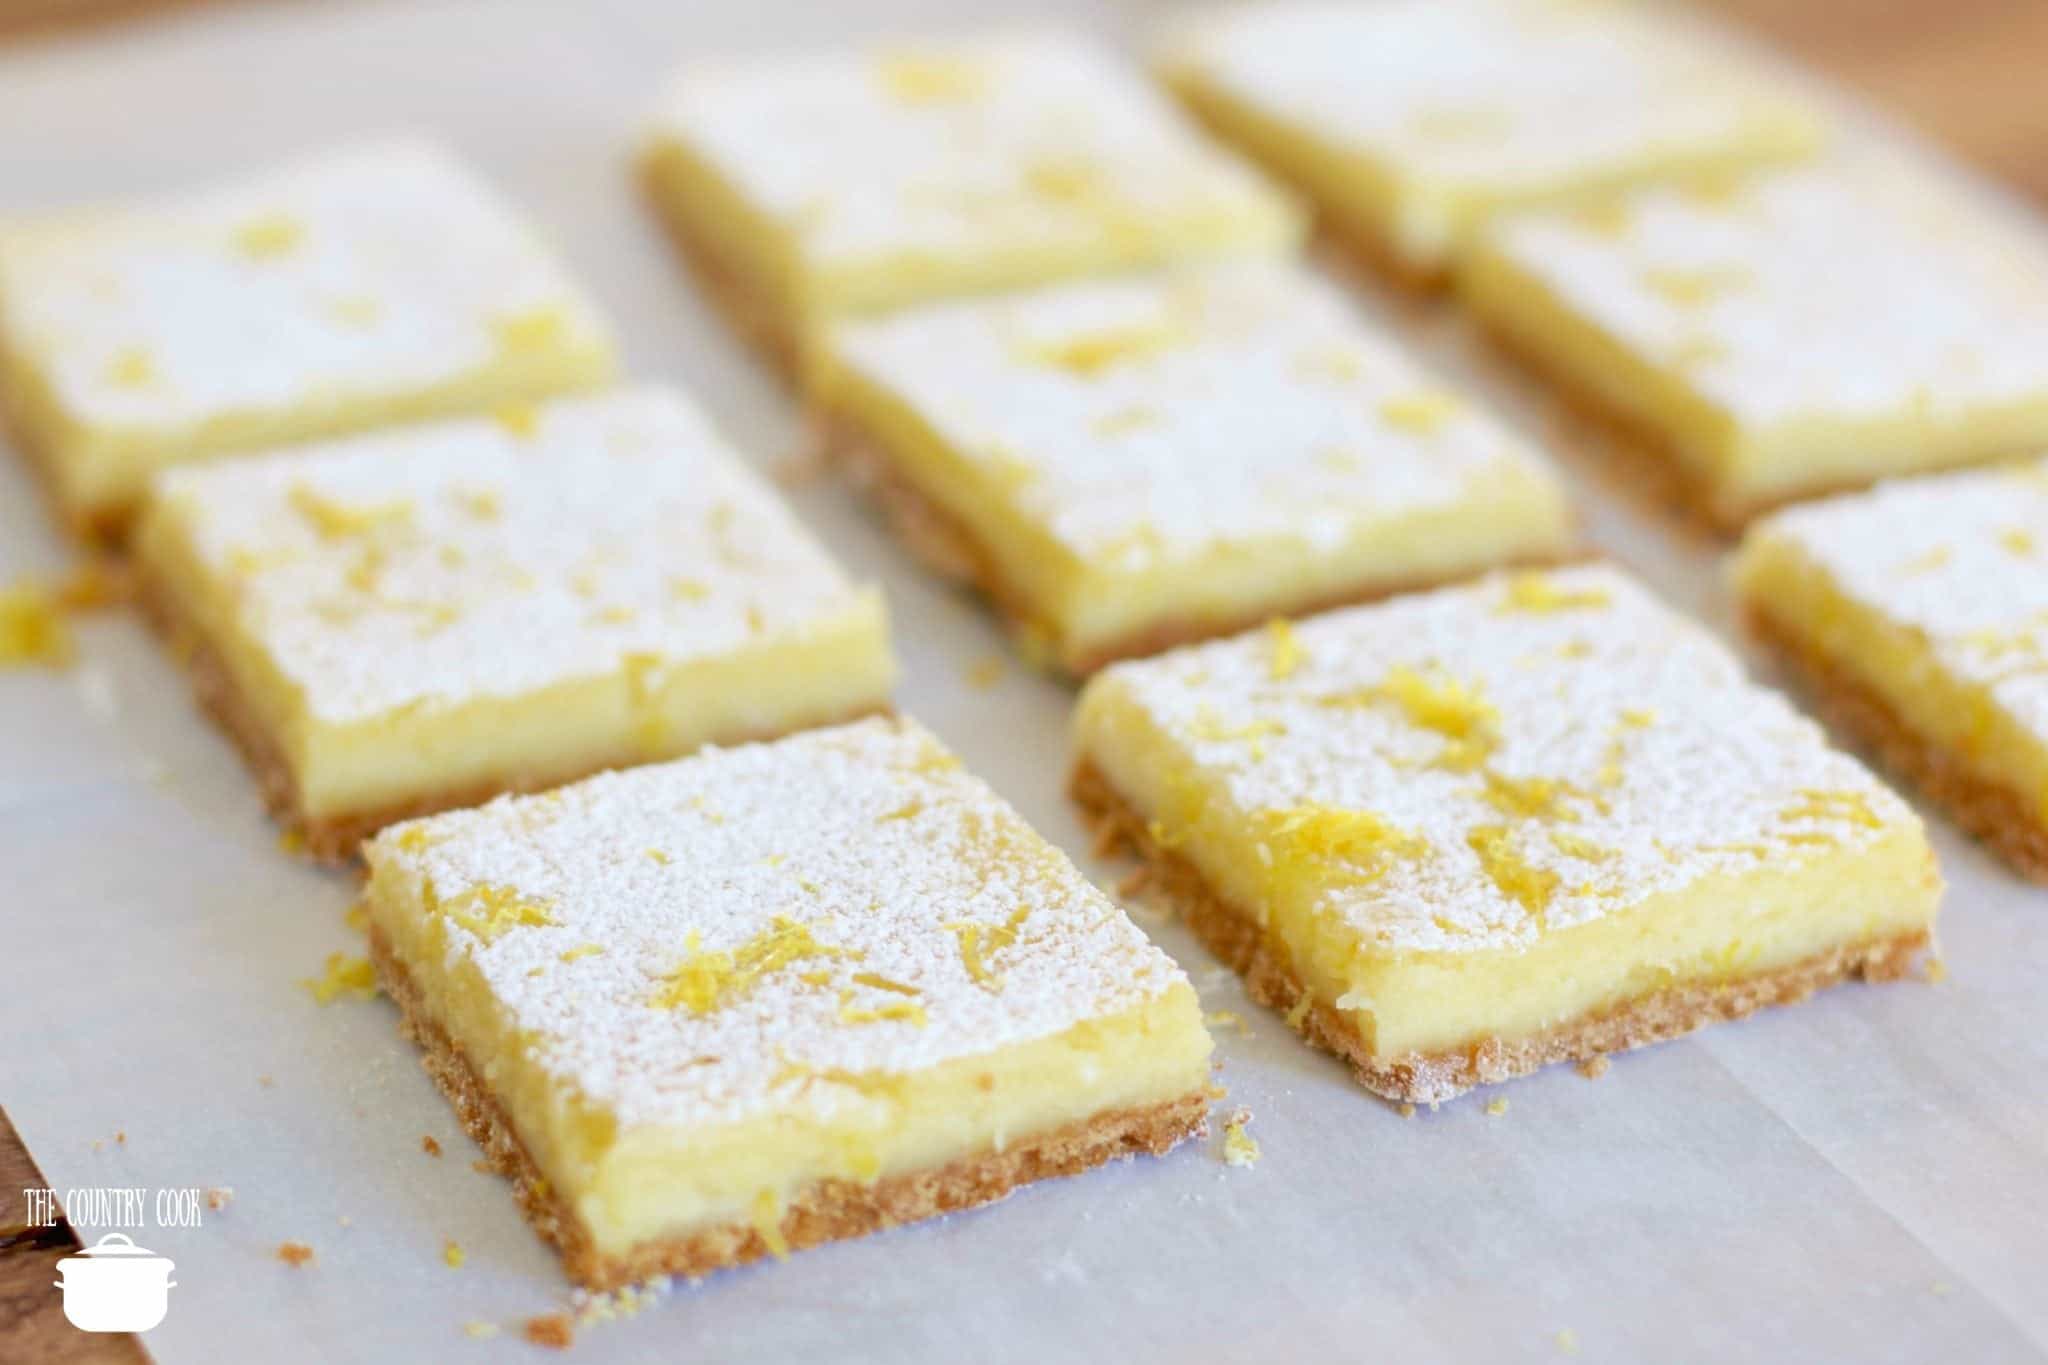 Creamy Lemon Bars with fresh lemon juice topped with powdered sugar.